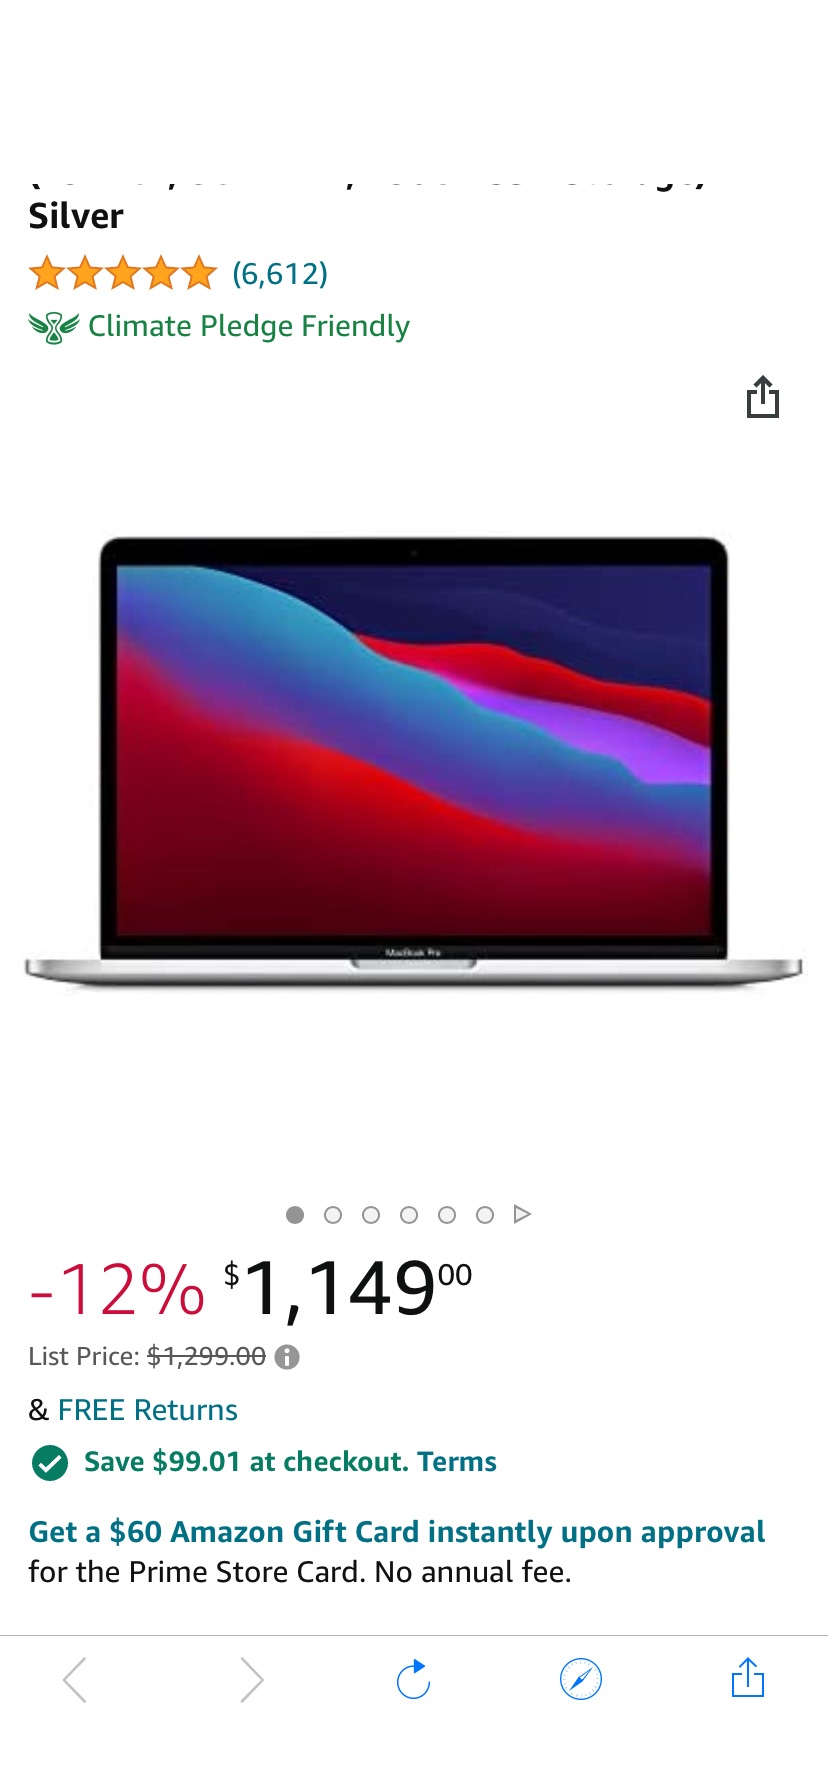 Amazon.com: 2020 Apple MacBook Pro with Apple M1 Chip (13-inch, 8GB RAM, 256GB SSD Storage) - Silver : Electronics结账减